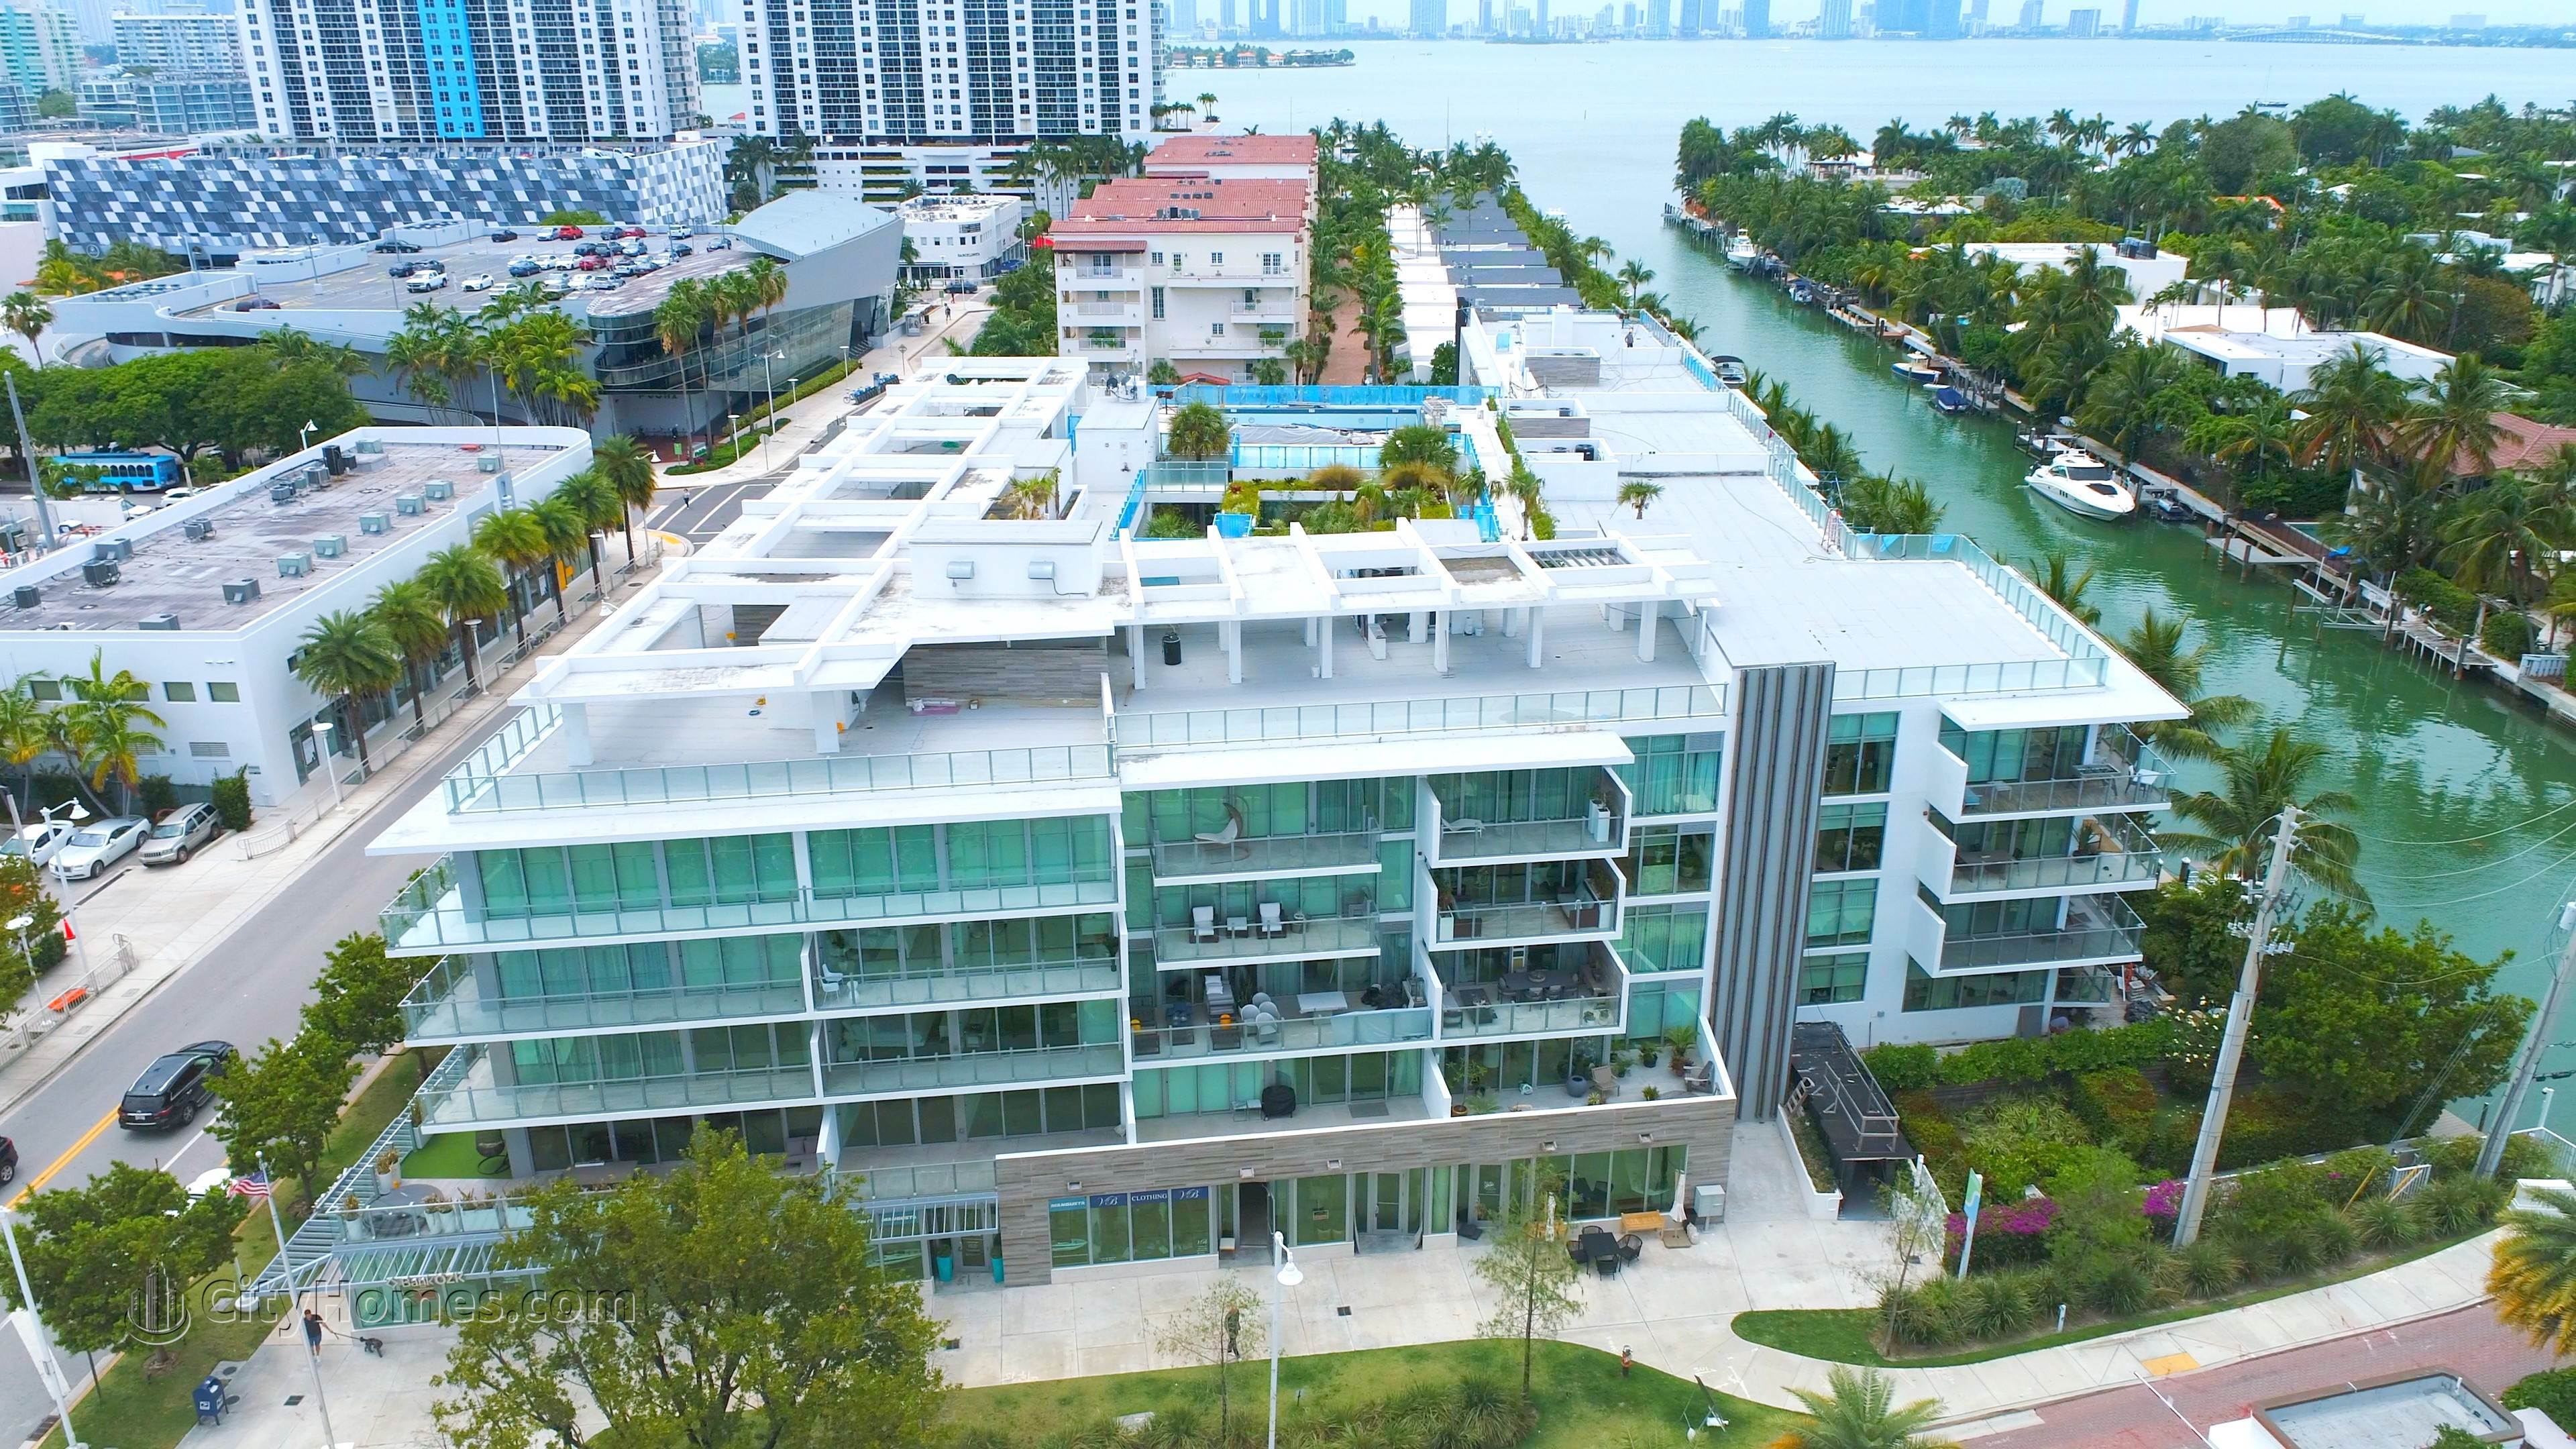 2. PALAU SUNSET HARBOUR building at 1201 20th Street, Mid Beach, Miami Beach, FL 33139